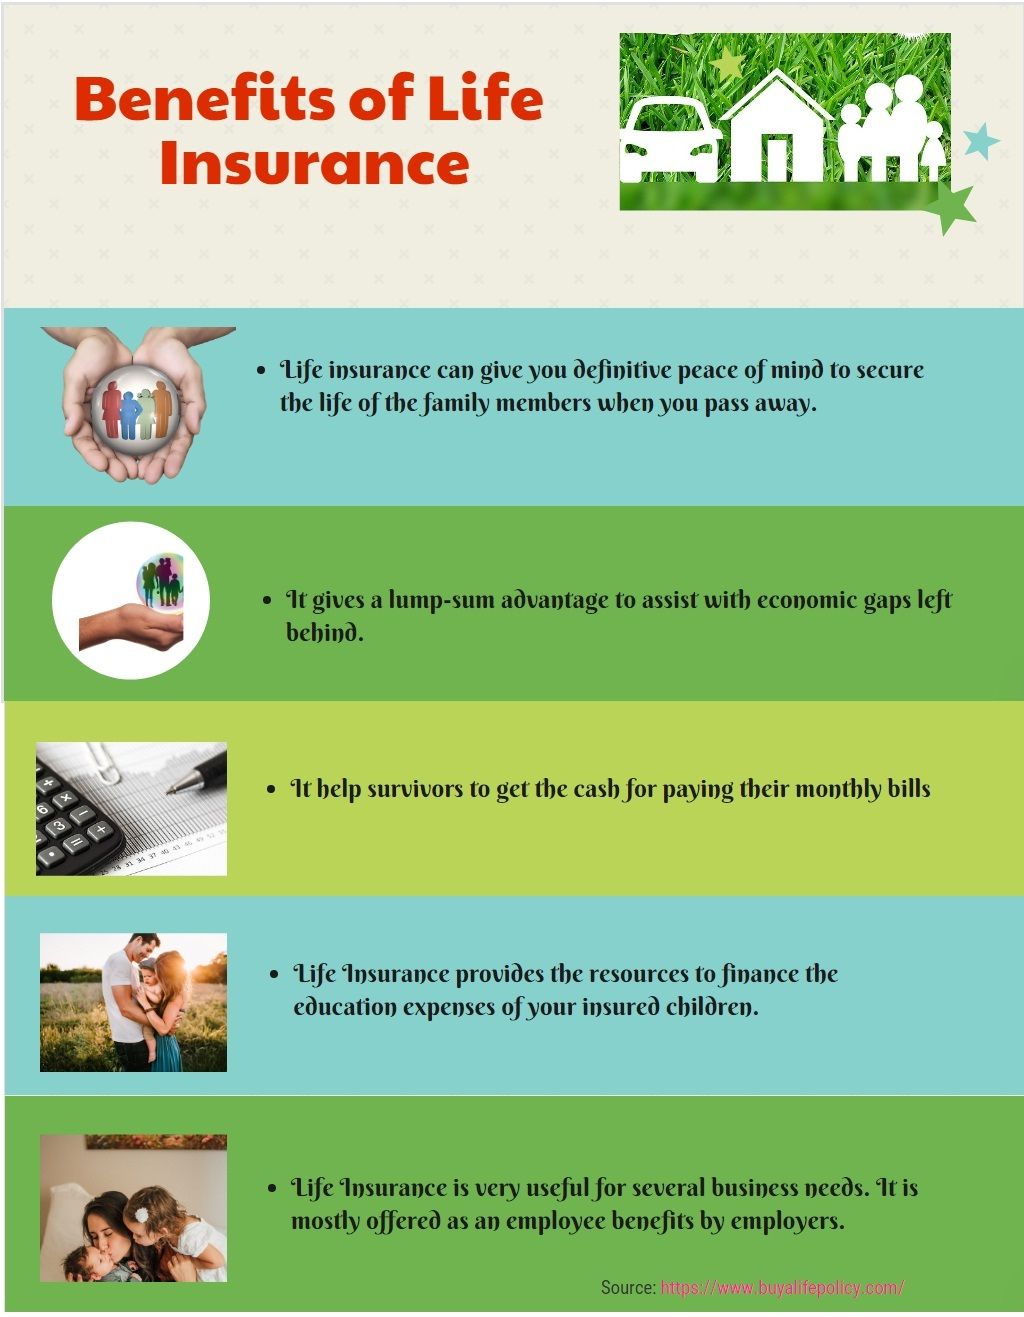 Benefits of Life Insurance | Benefits of life insurance, Life insurance